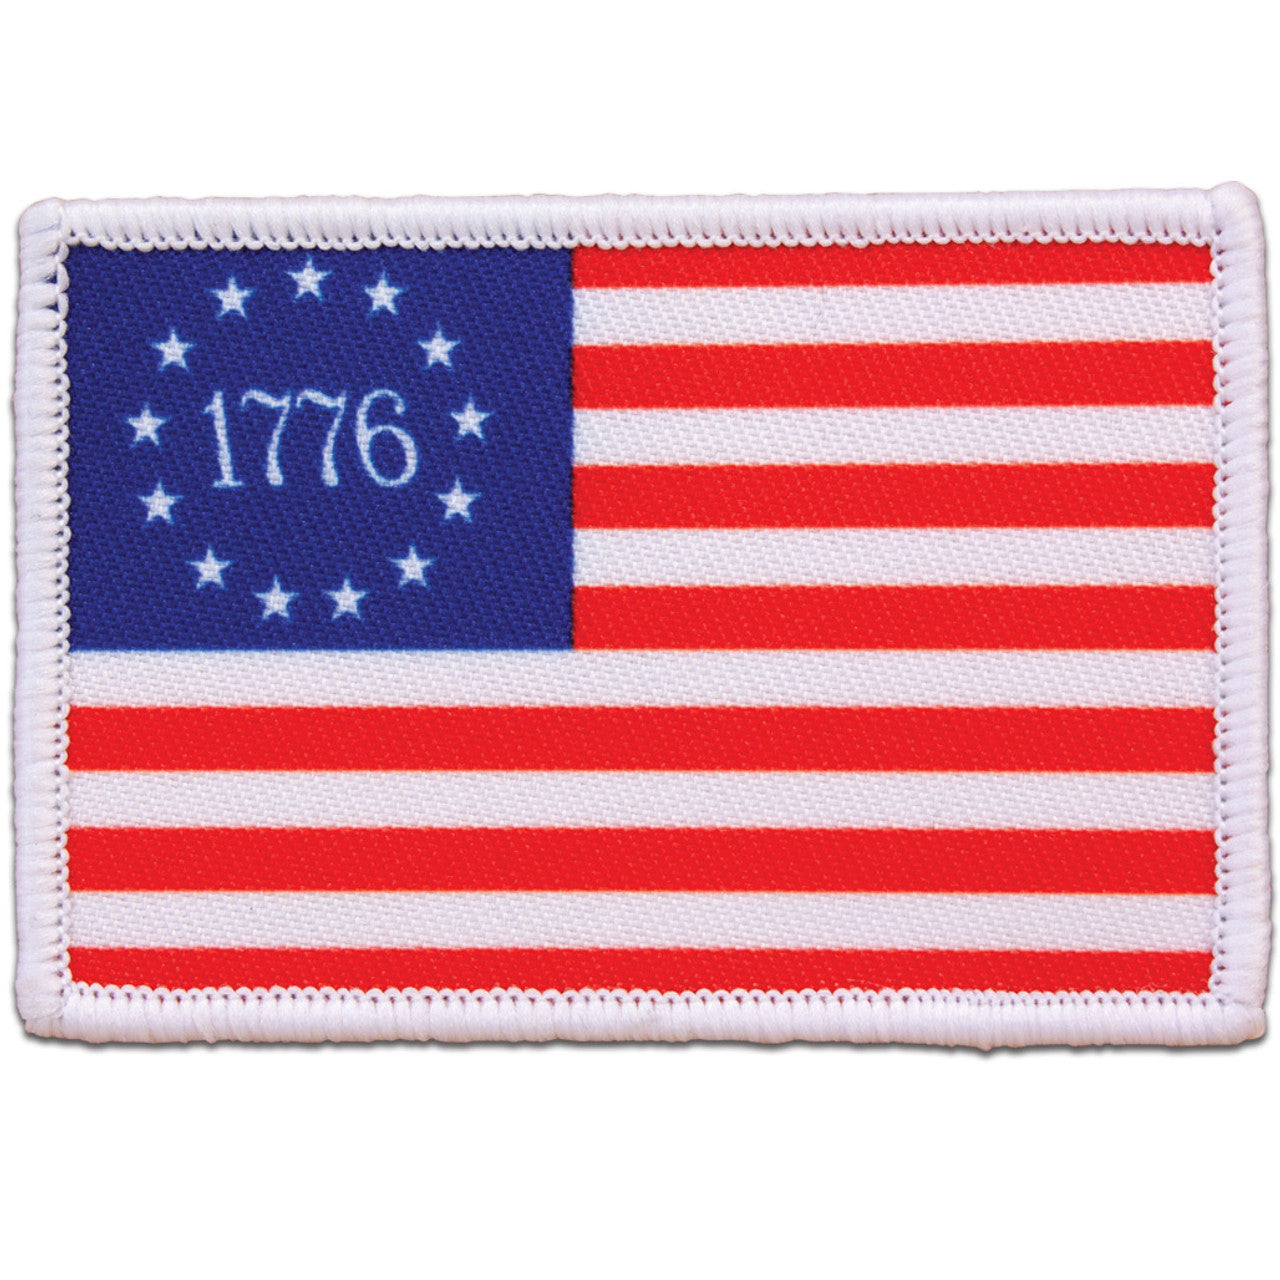 "1776 FLAG" MORALE PATCH